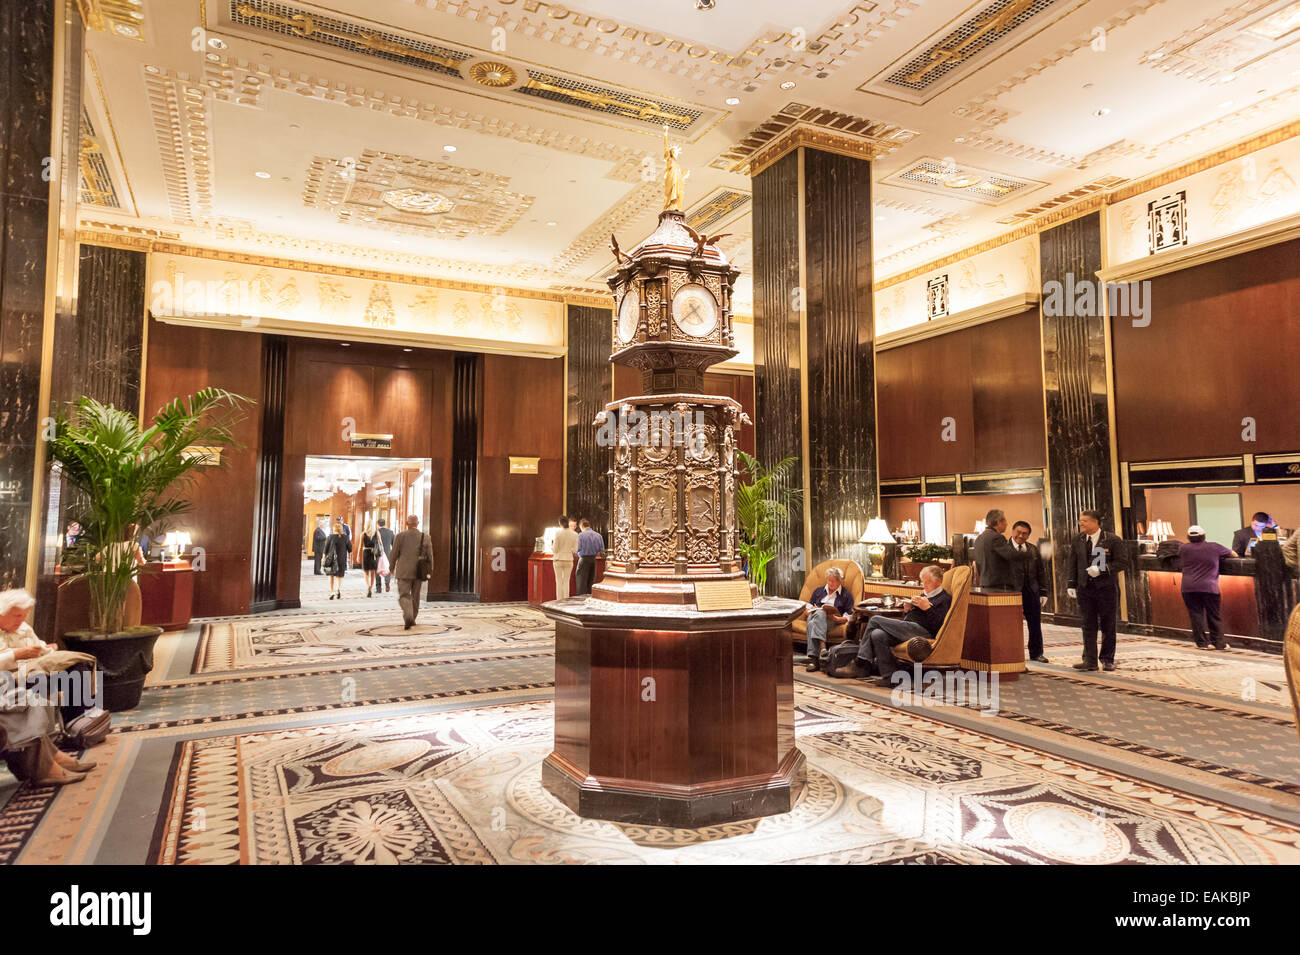 Lobby of the Waldorf Astoria Hotel, New York City, USA Stock Photo